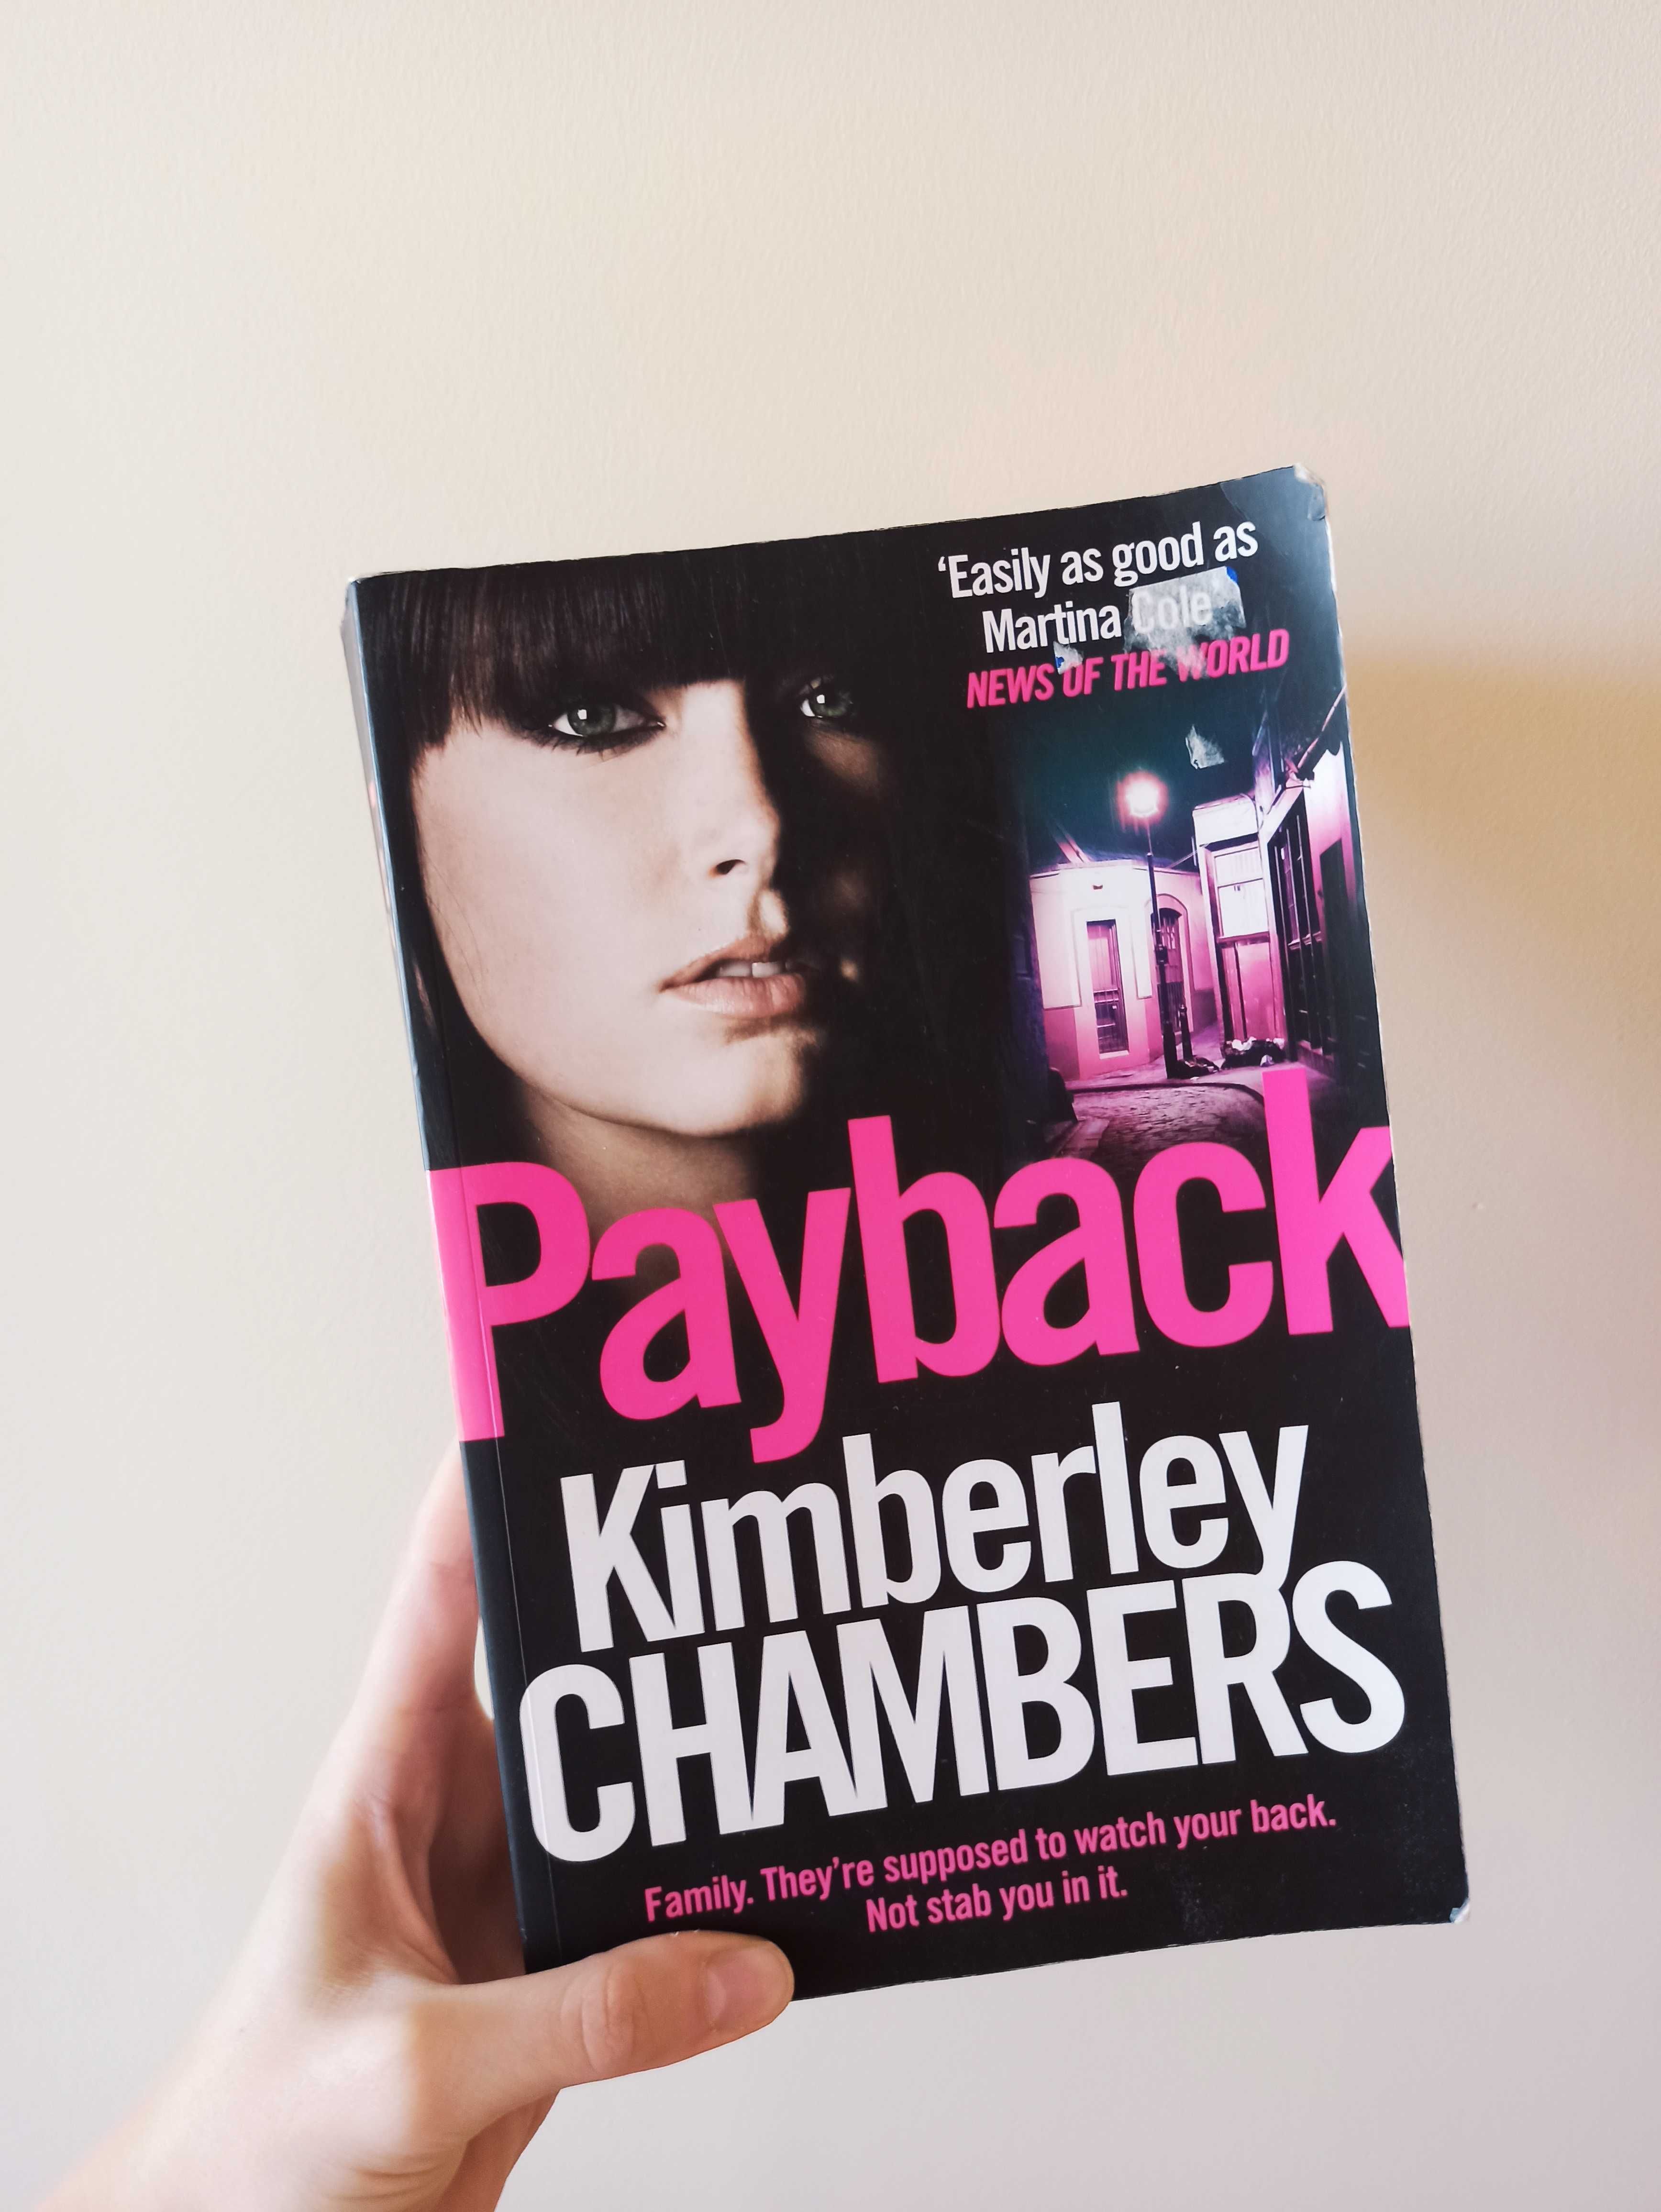 Payback Kimberley Chambers